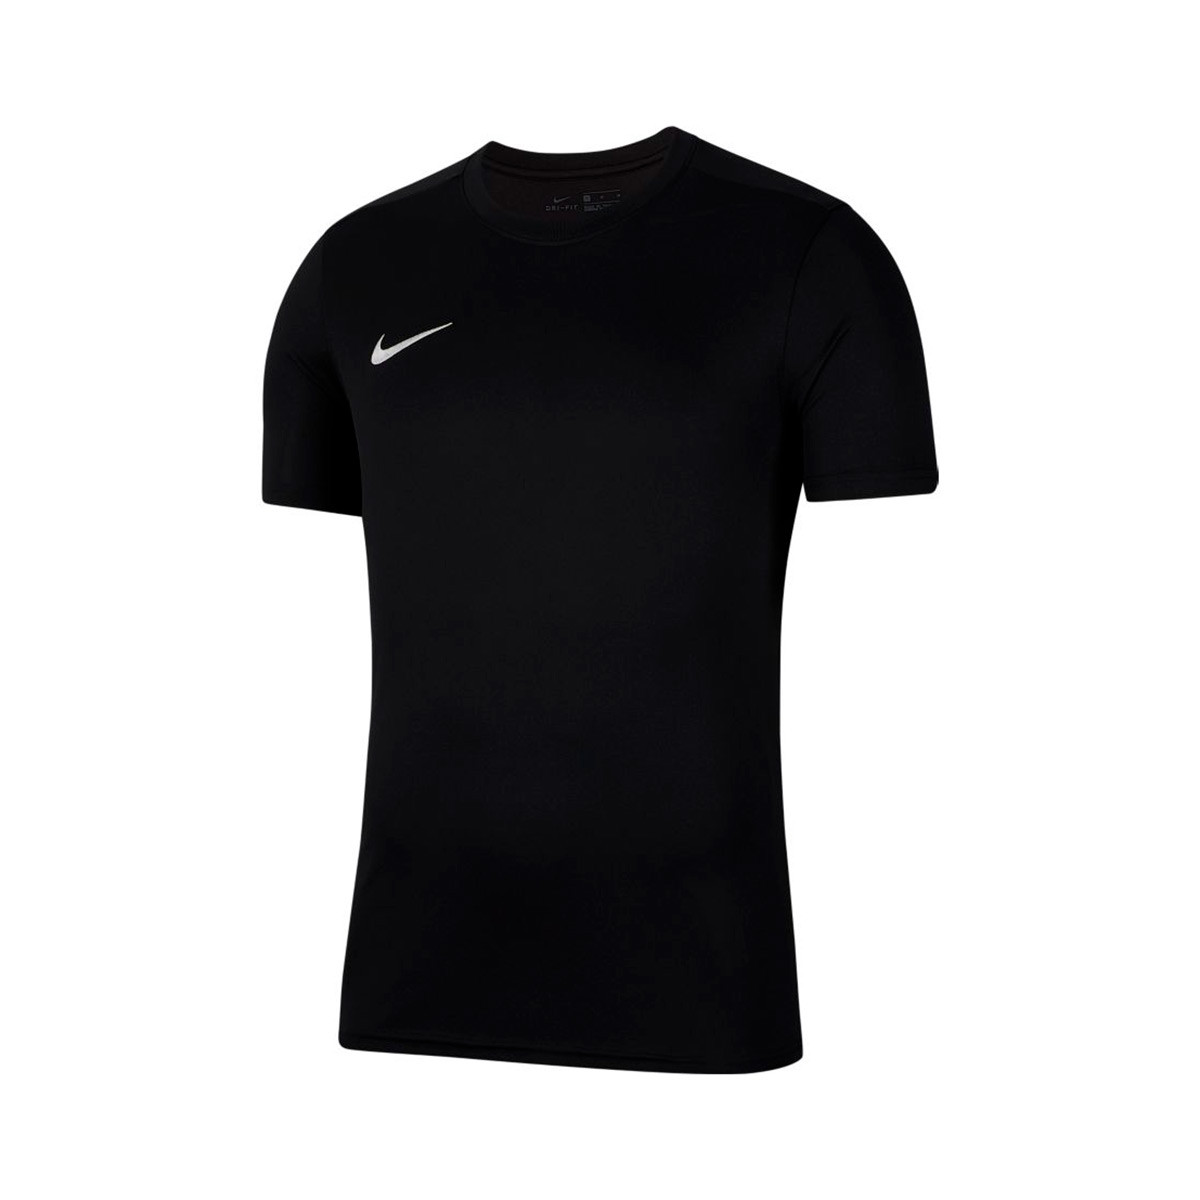 Camiseta Nike Park m/c Black - Fútbol Emotion